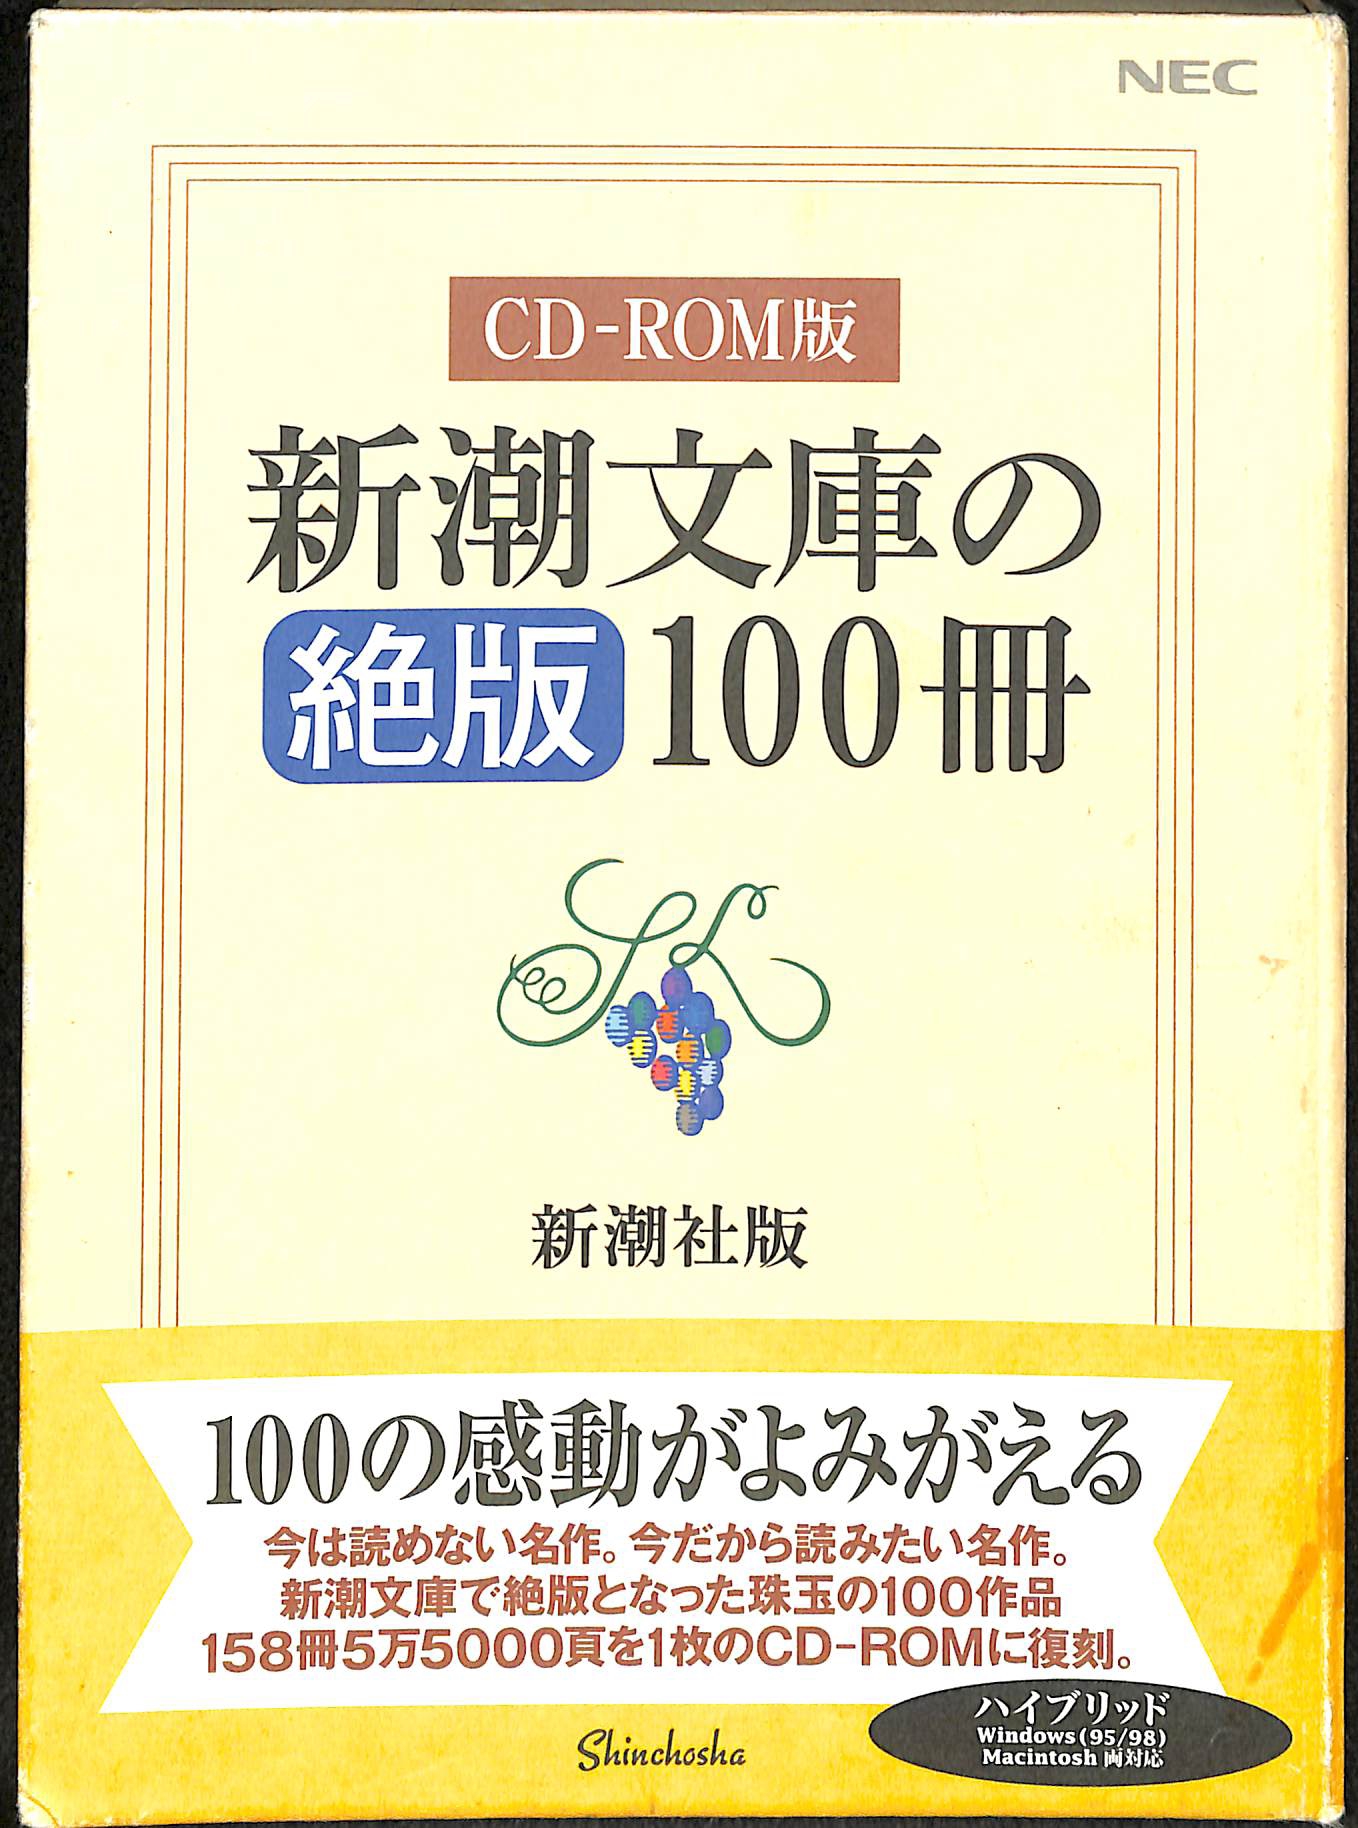 CD-ROM版 新潮文庫の絶版100冊 | 古本よみた屋 おじいさんの本、買います。